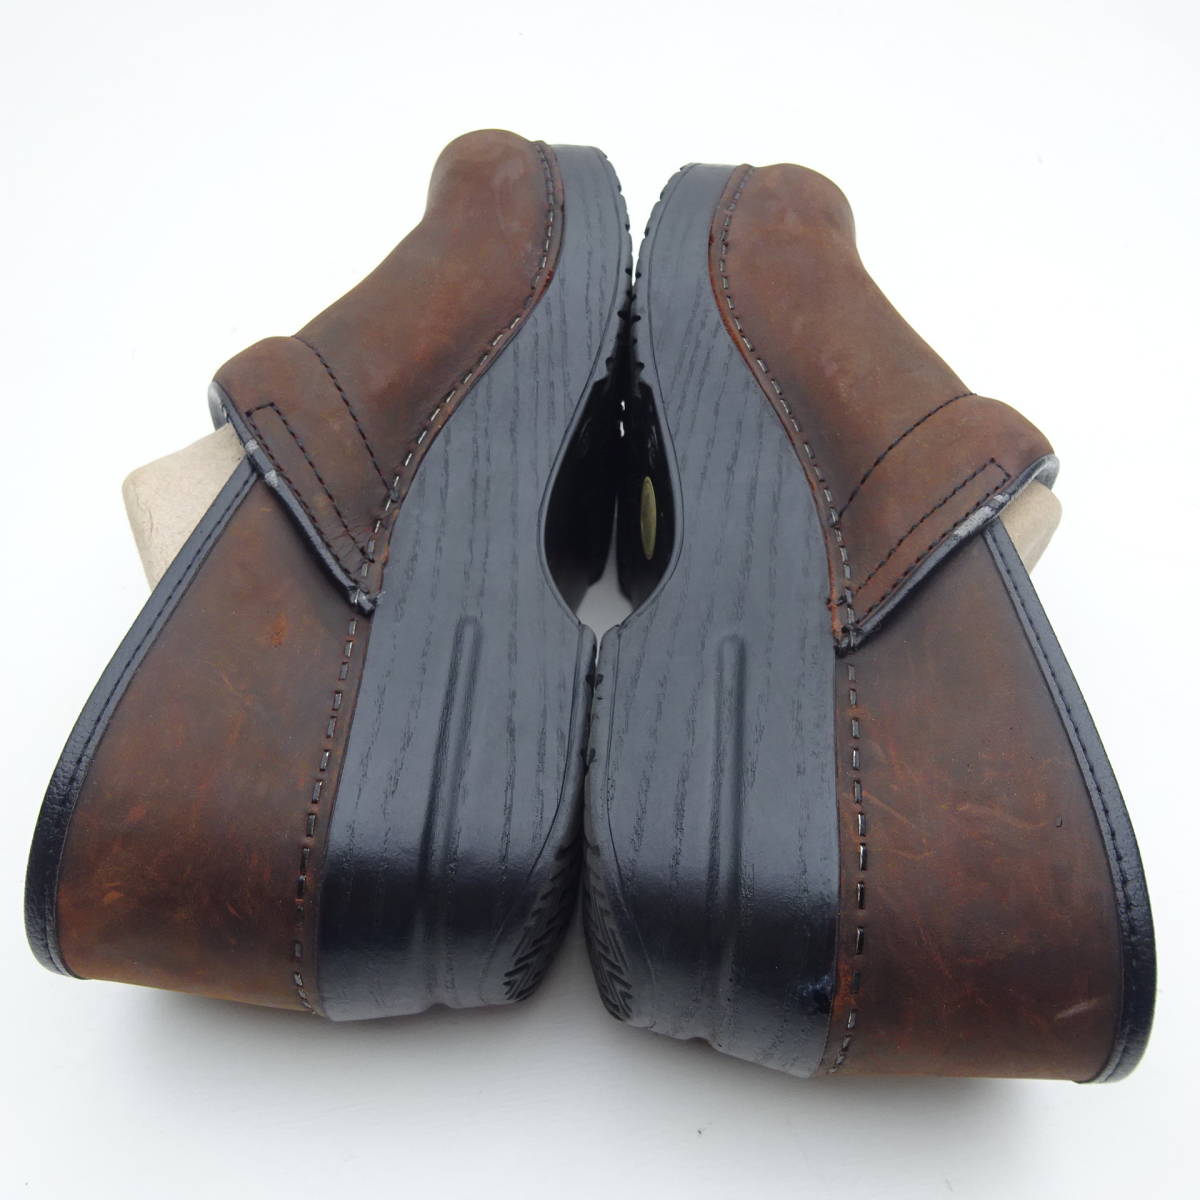 DANSKO Professional Dance ko sabot Professional shoes clog s original leather sabot comfort shoes shoes lady's (38) tea 